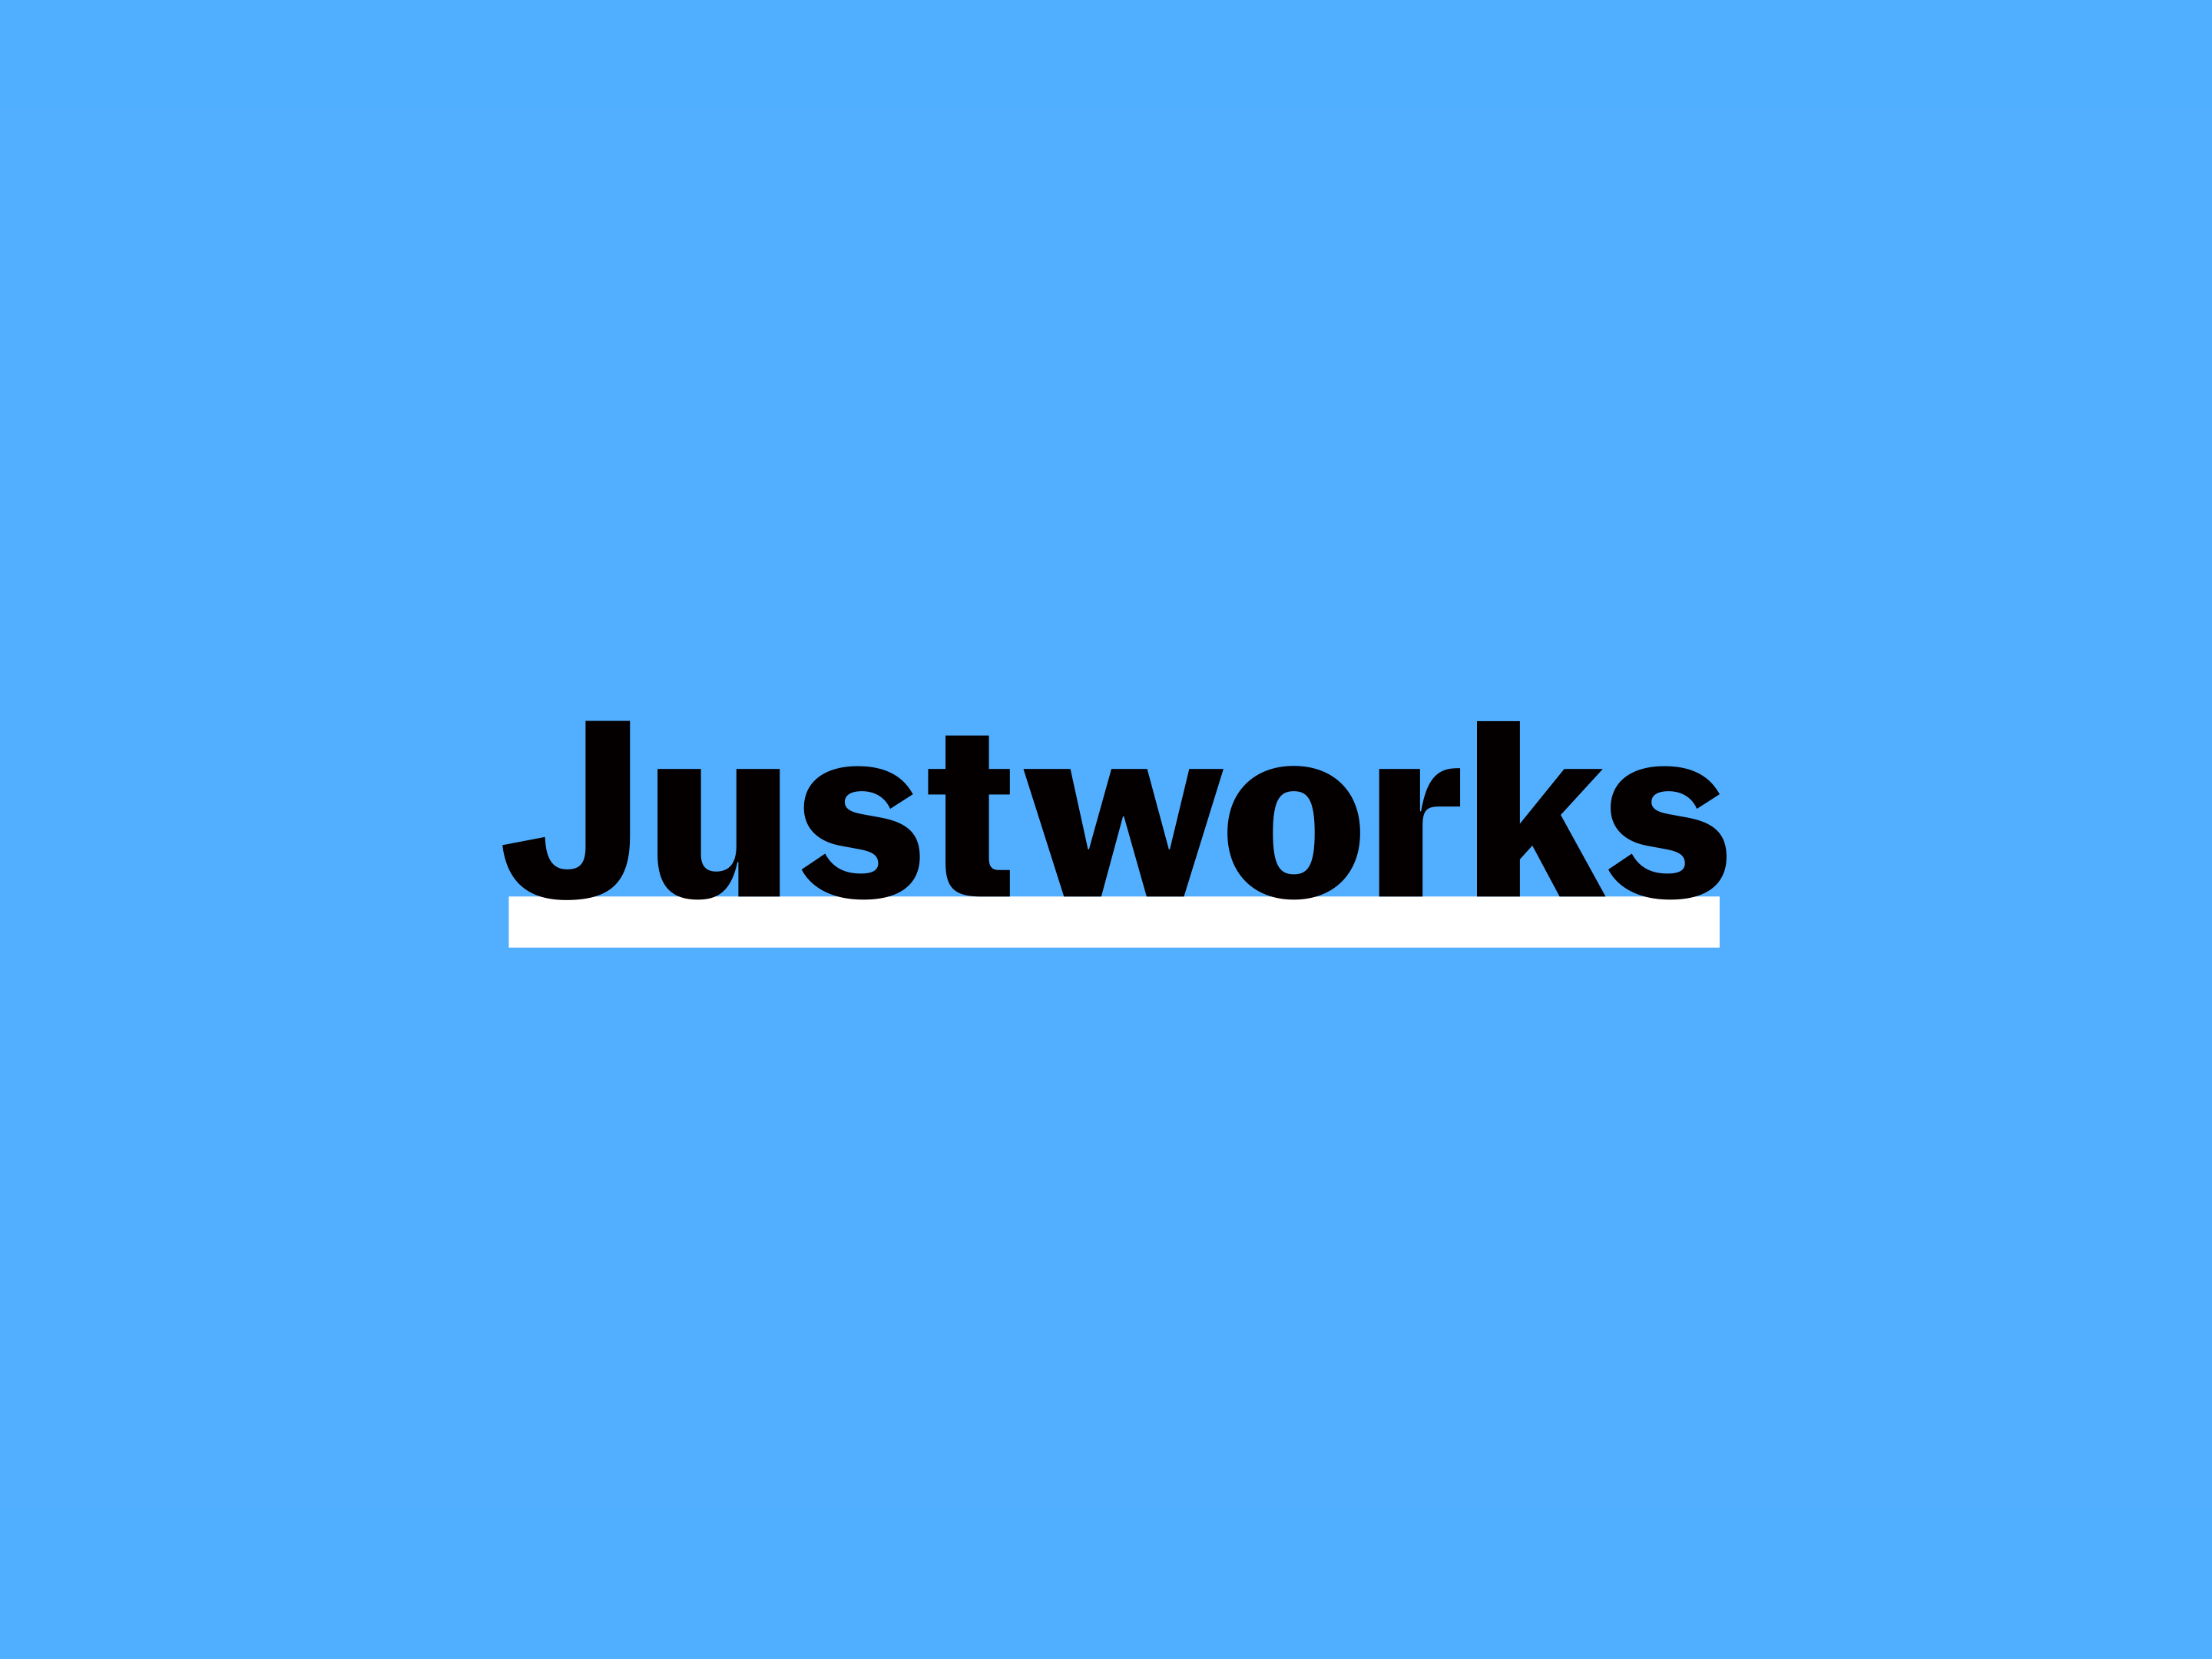 Justworks - new logo, branding